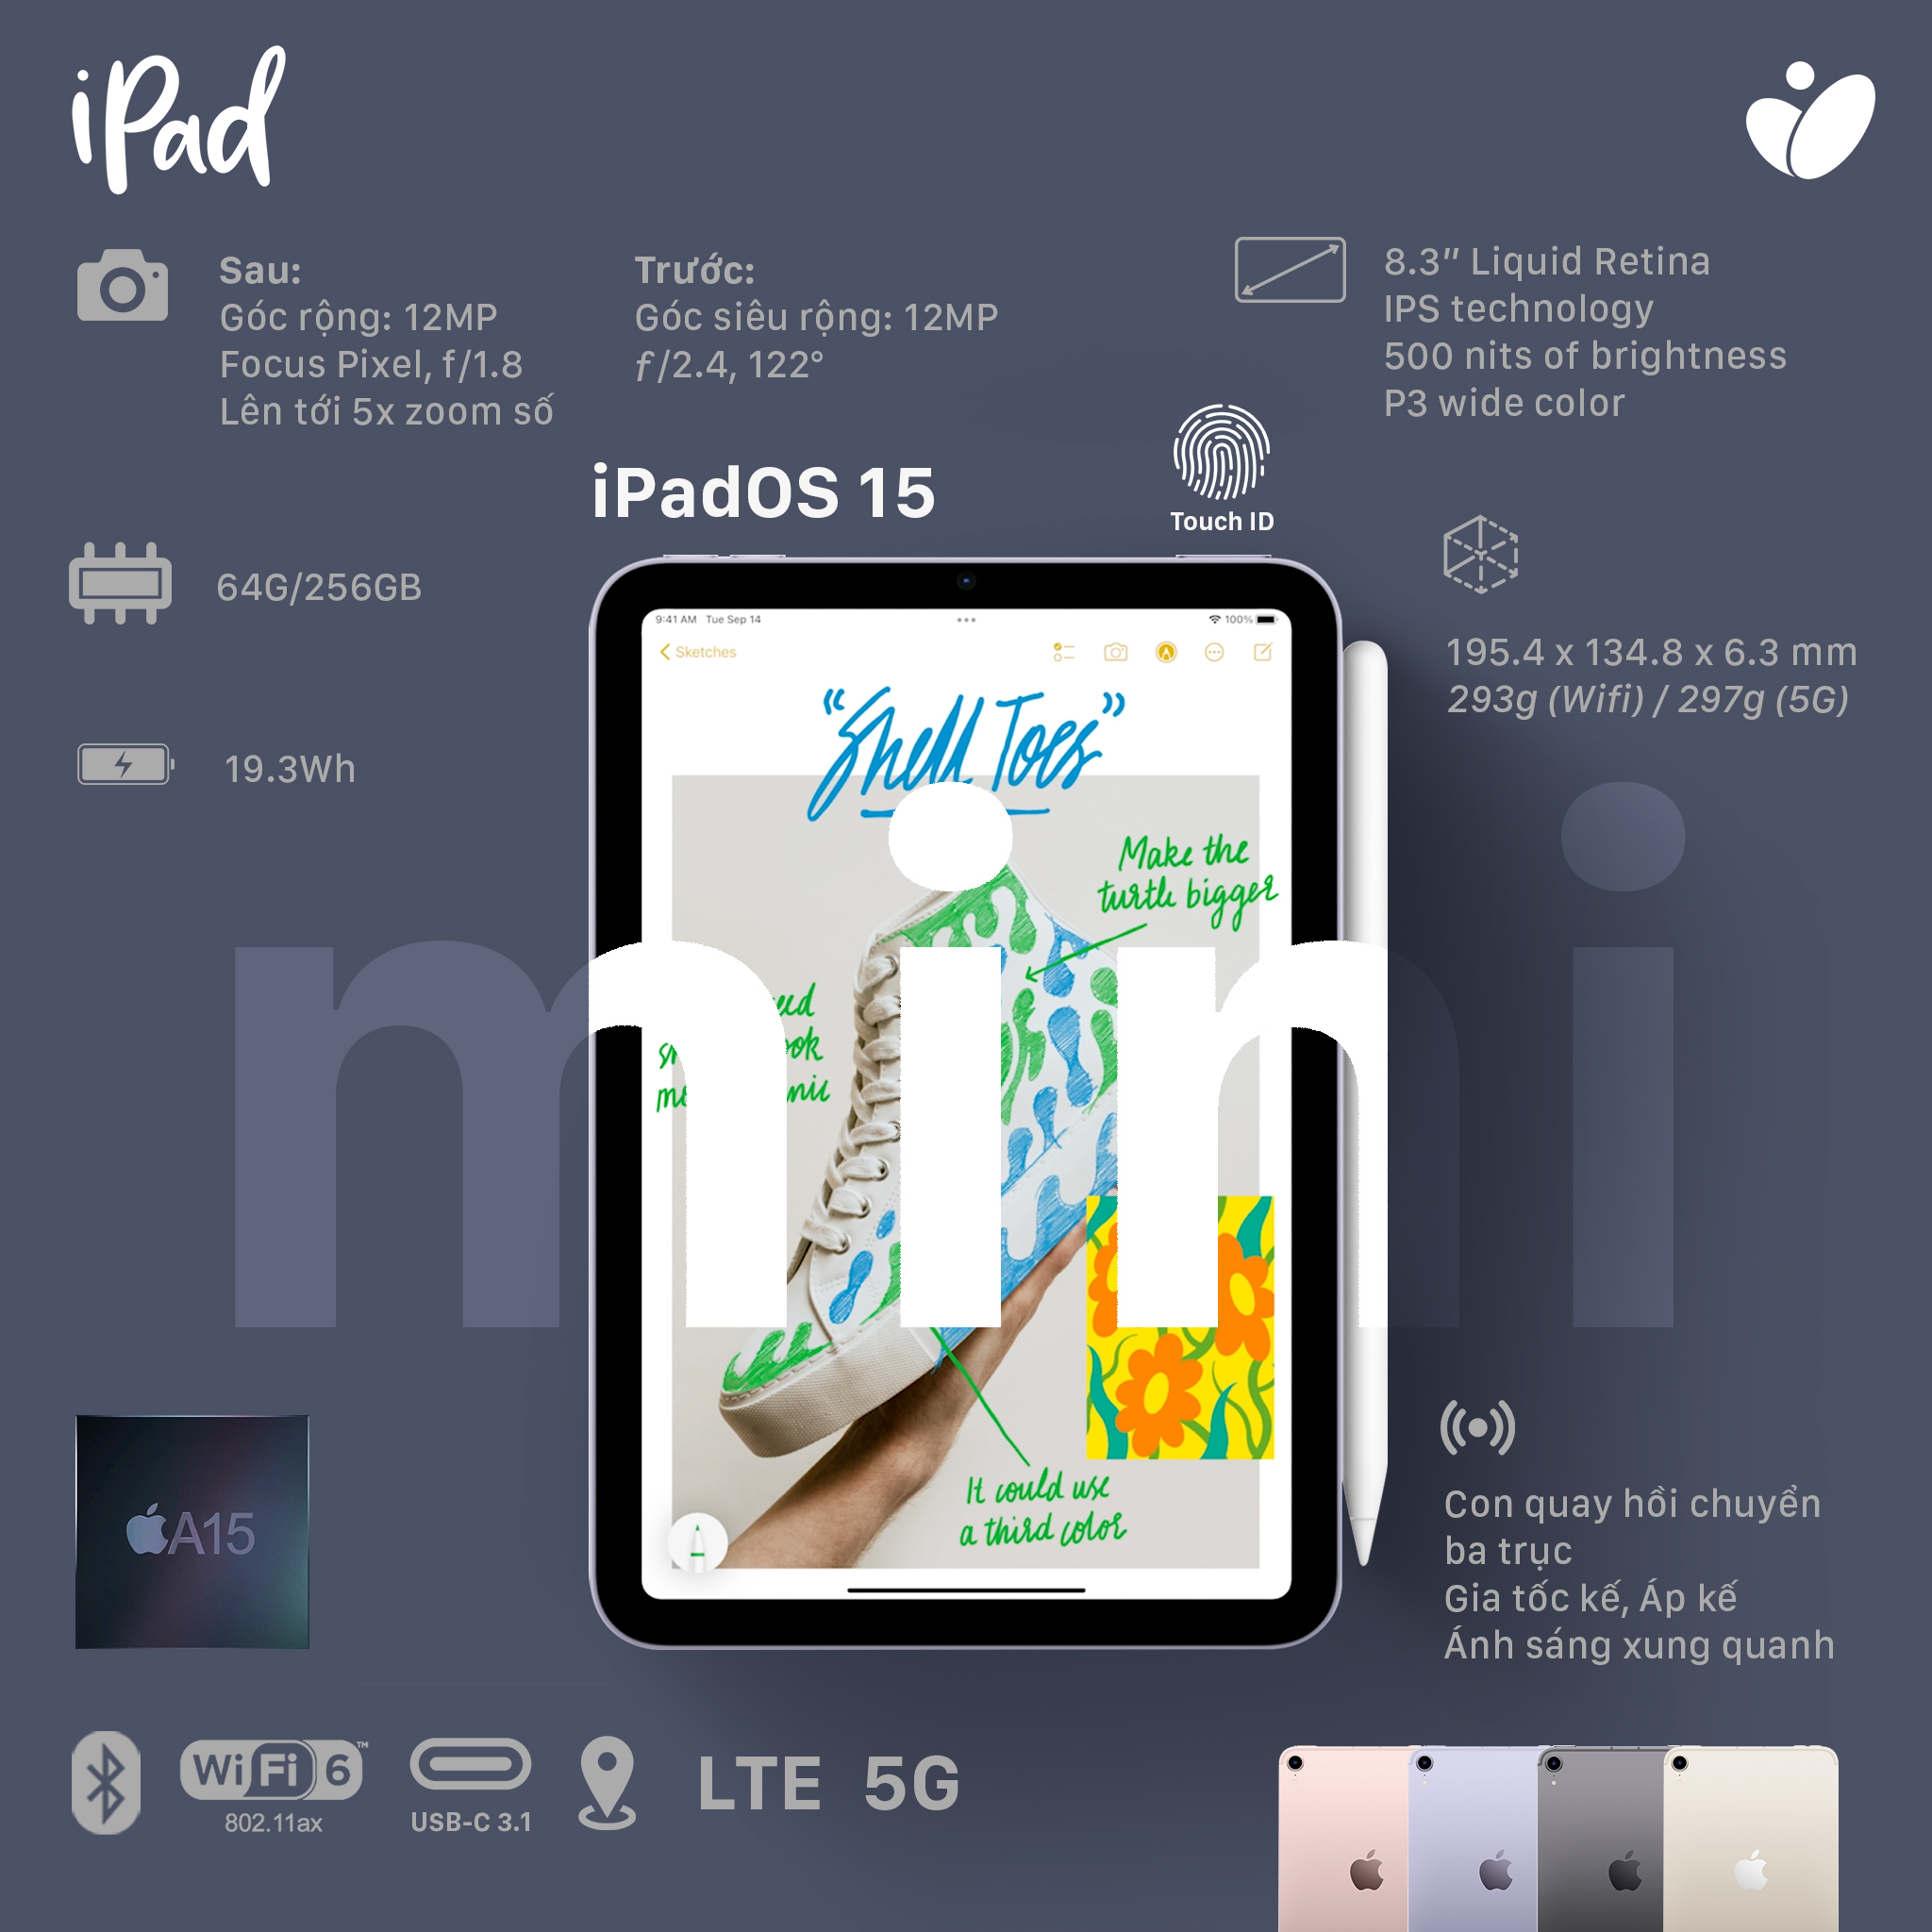 iPad mini.jpg